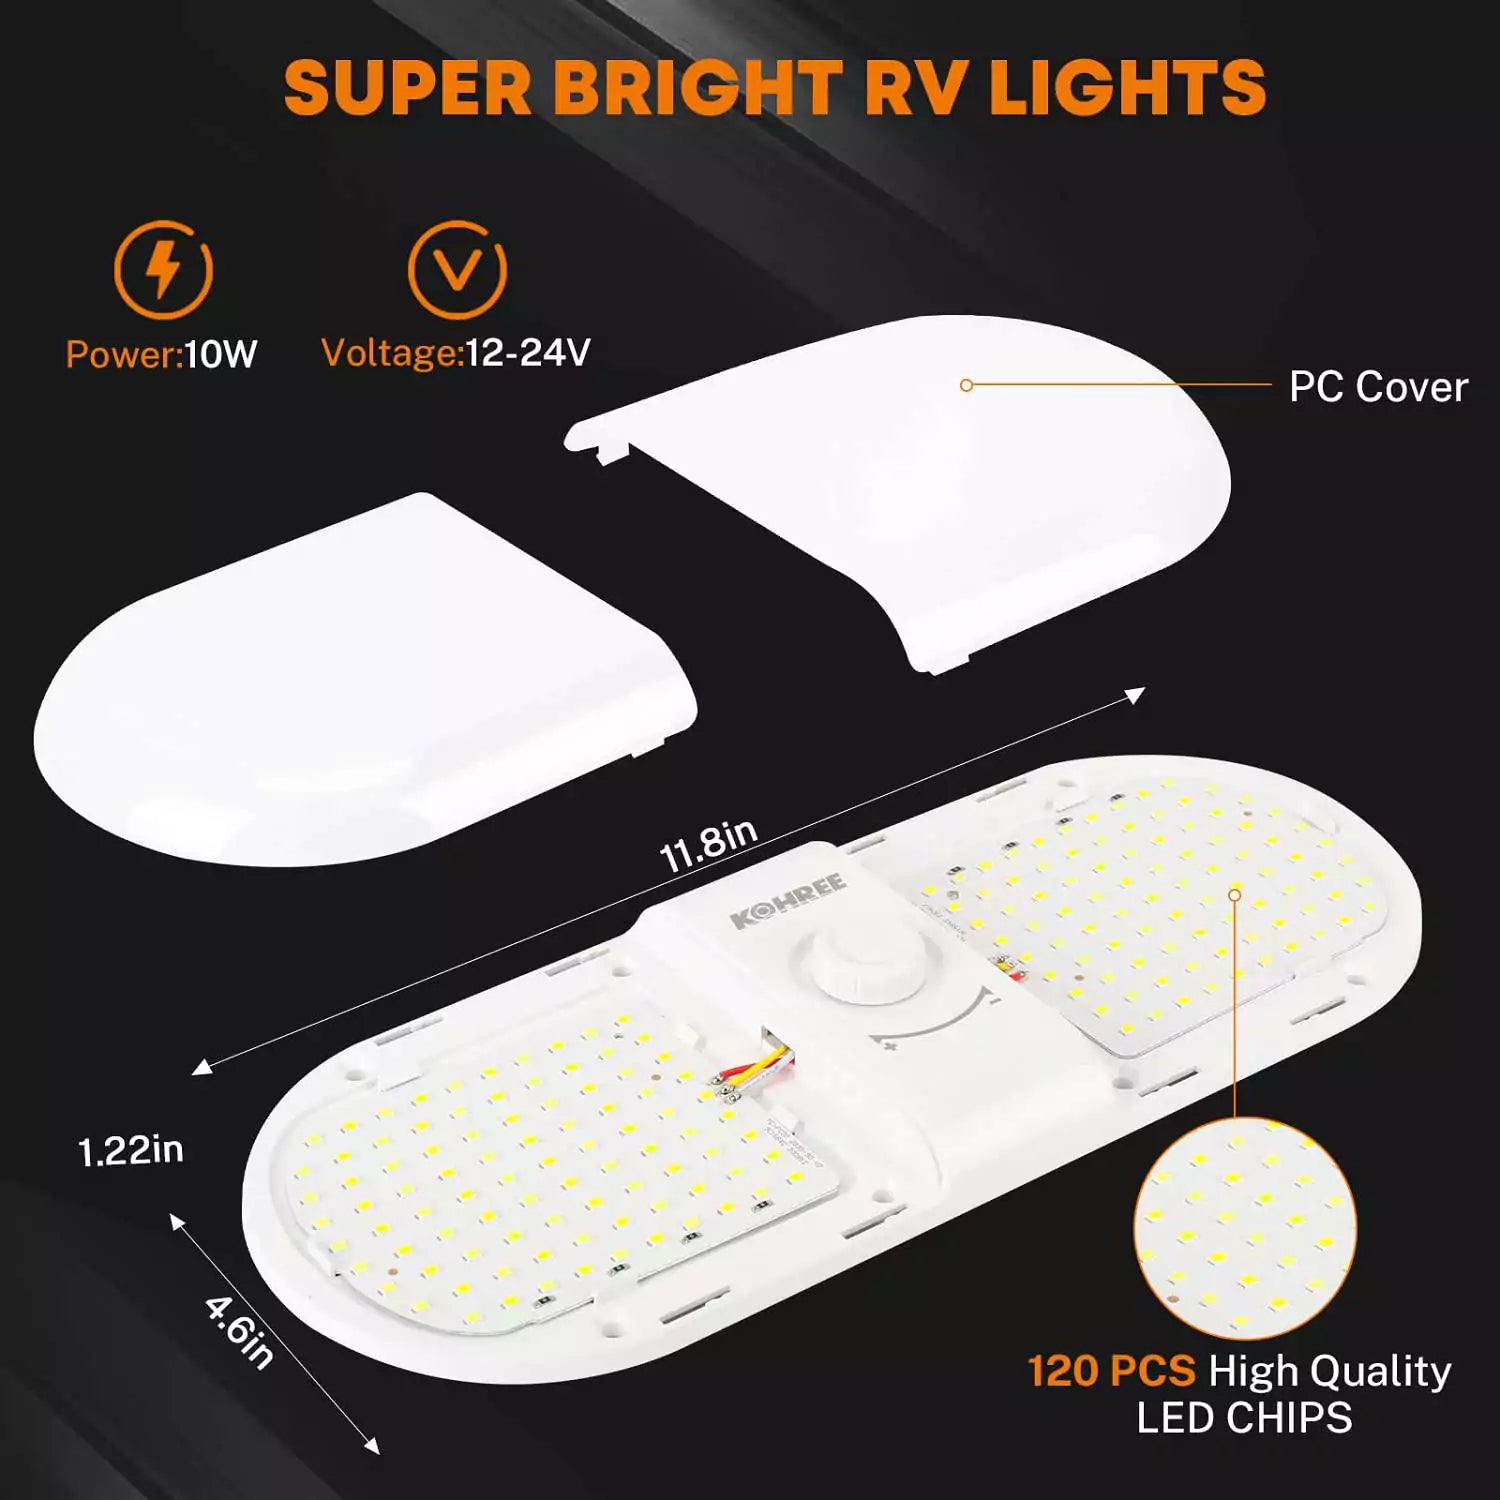 Super bright RV lights for 1800LM RV camper lights